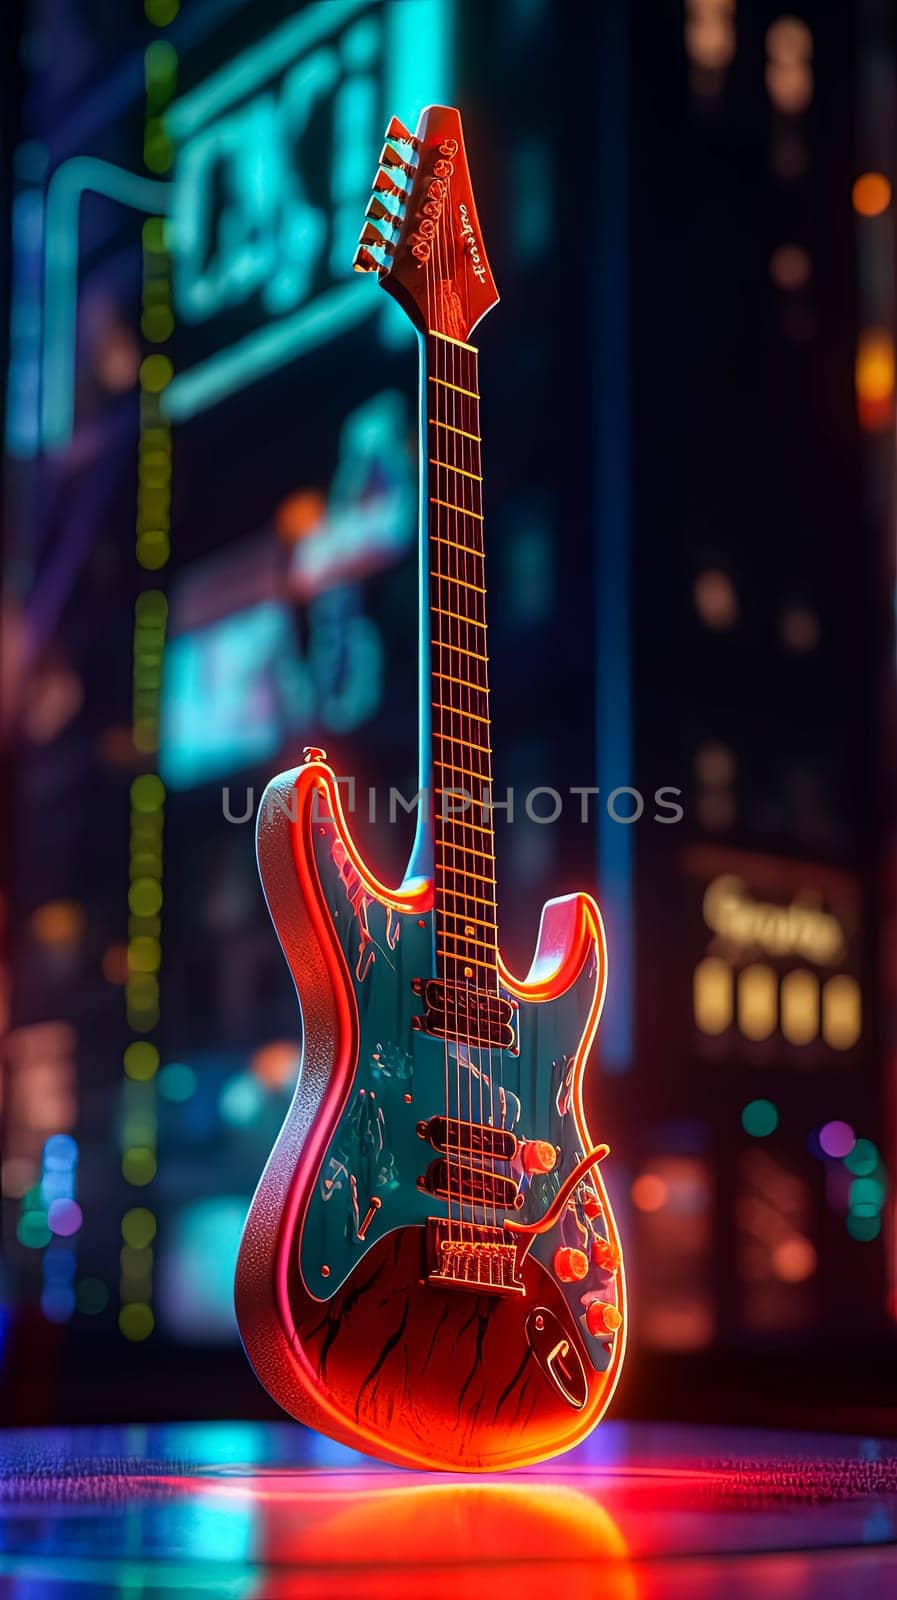 A neon guitar with a purple and blue color scheme. by Alla_Morozova93